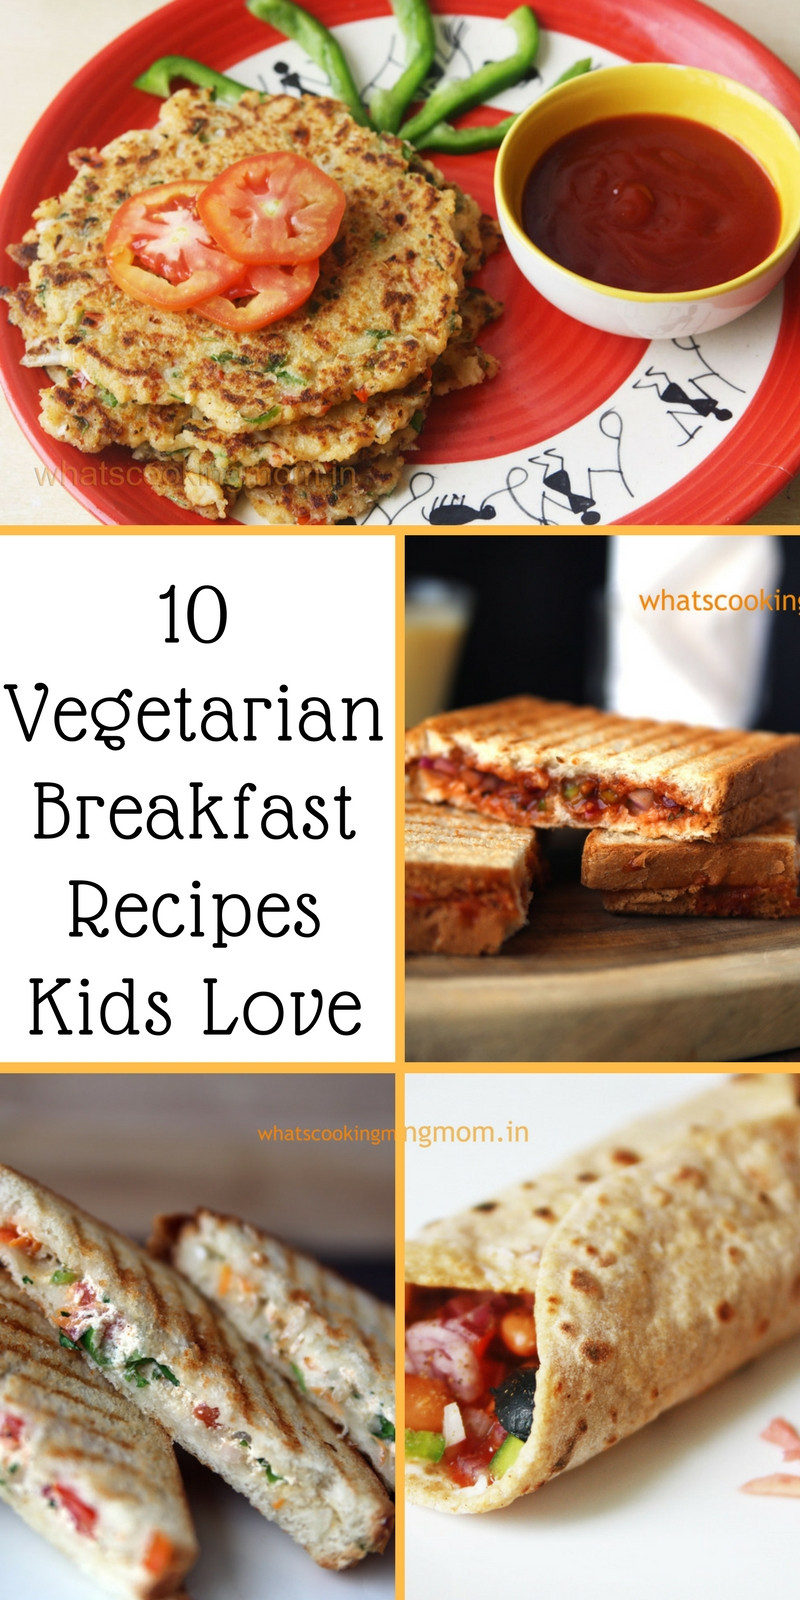 Vegetarian Kid Recipes
 10 ve arian breakfast recipes kids love whats cooking mom